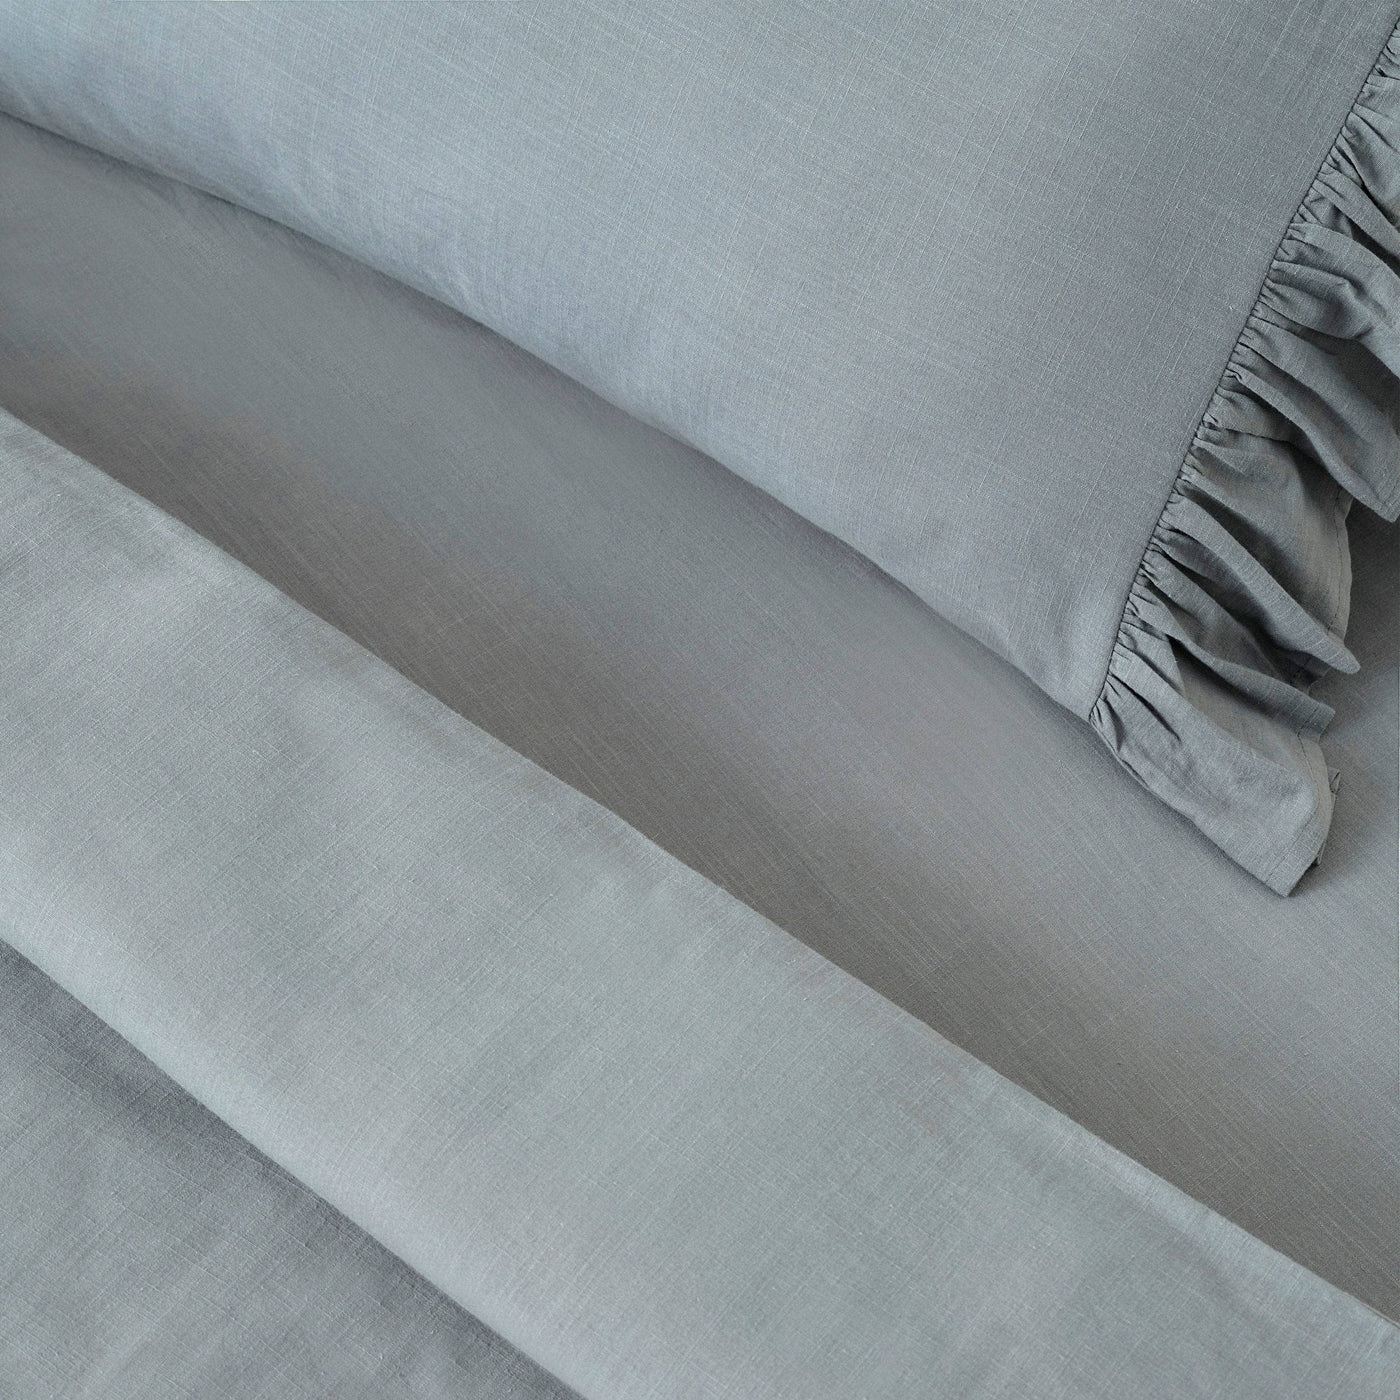 Ruby 100% Turkish Cotton Duvet Cover Set, Anthracite Grey, Super King Size Bedding Sets sazy.com